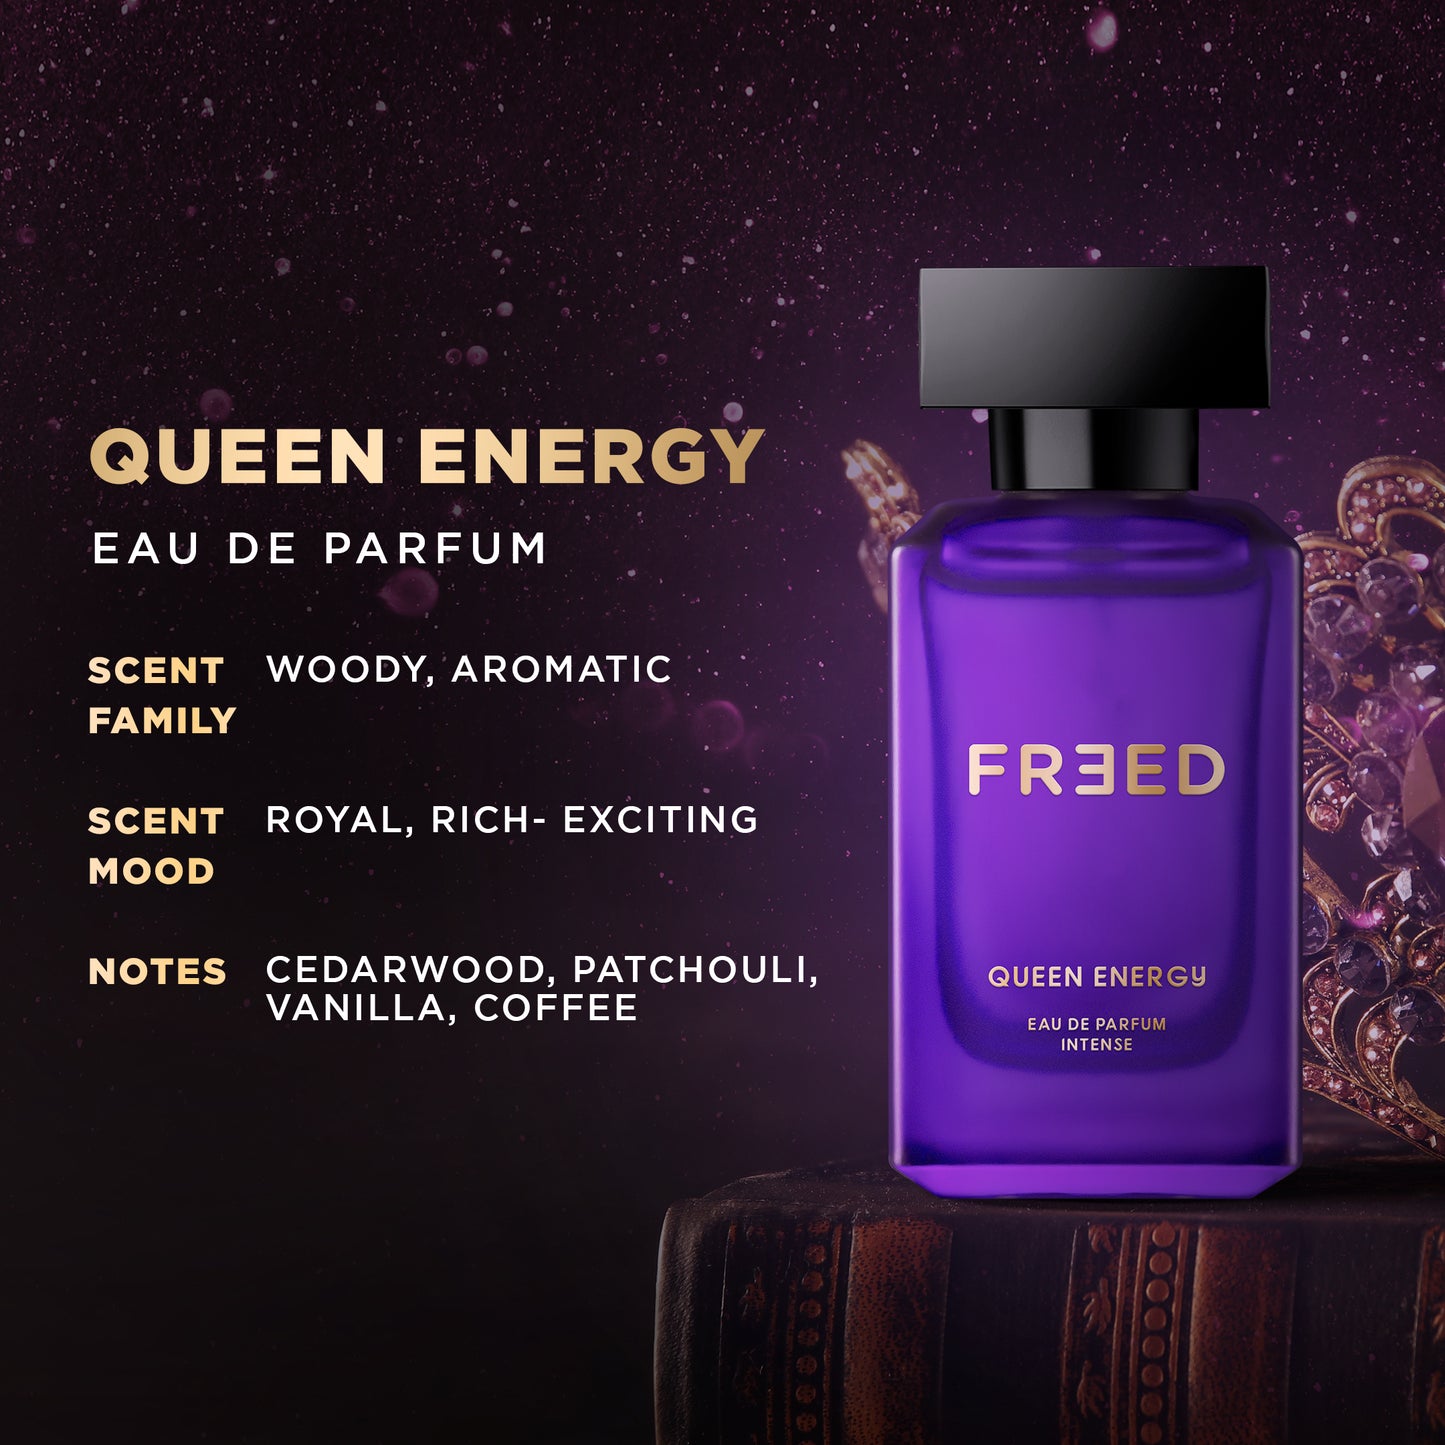 Freed Queen Energy Eau De Parfum Intense (80ml)